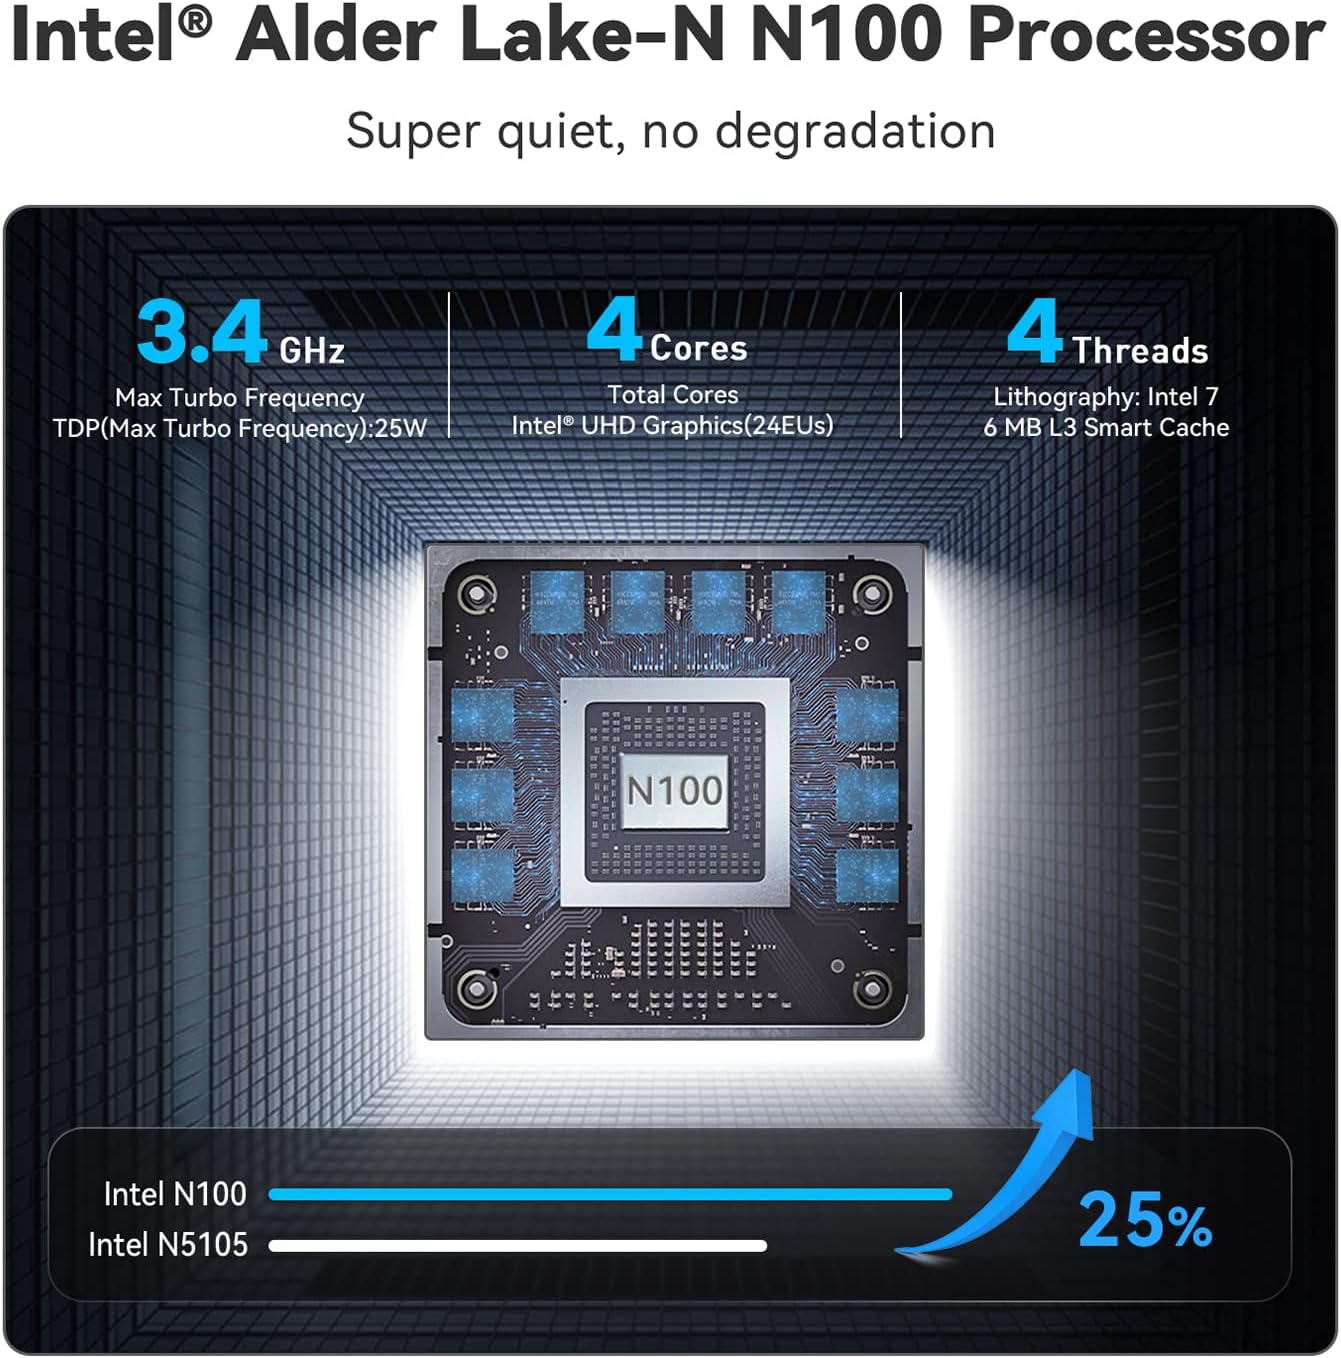 Beelink Mini S12 Pro Mini PC,12th Gen Intel Alder Lake-N100 Processor,up to 3.4GHz(4C/4T),Mini Computer with 16G DDR4 RAM/500GB PCIe SSD,Supports 4K Dual display/WiFi6/BT5.2/USB 3.2/Gigabit Ethernet